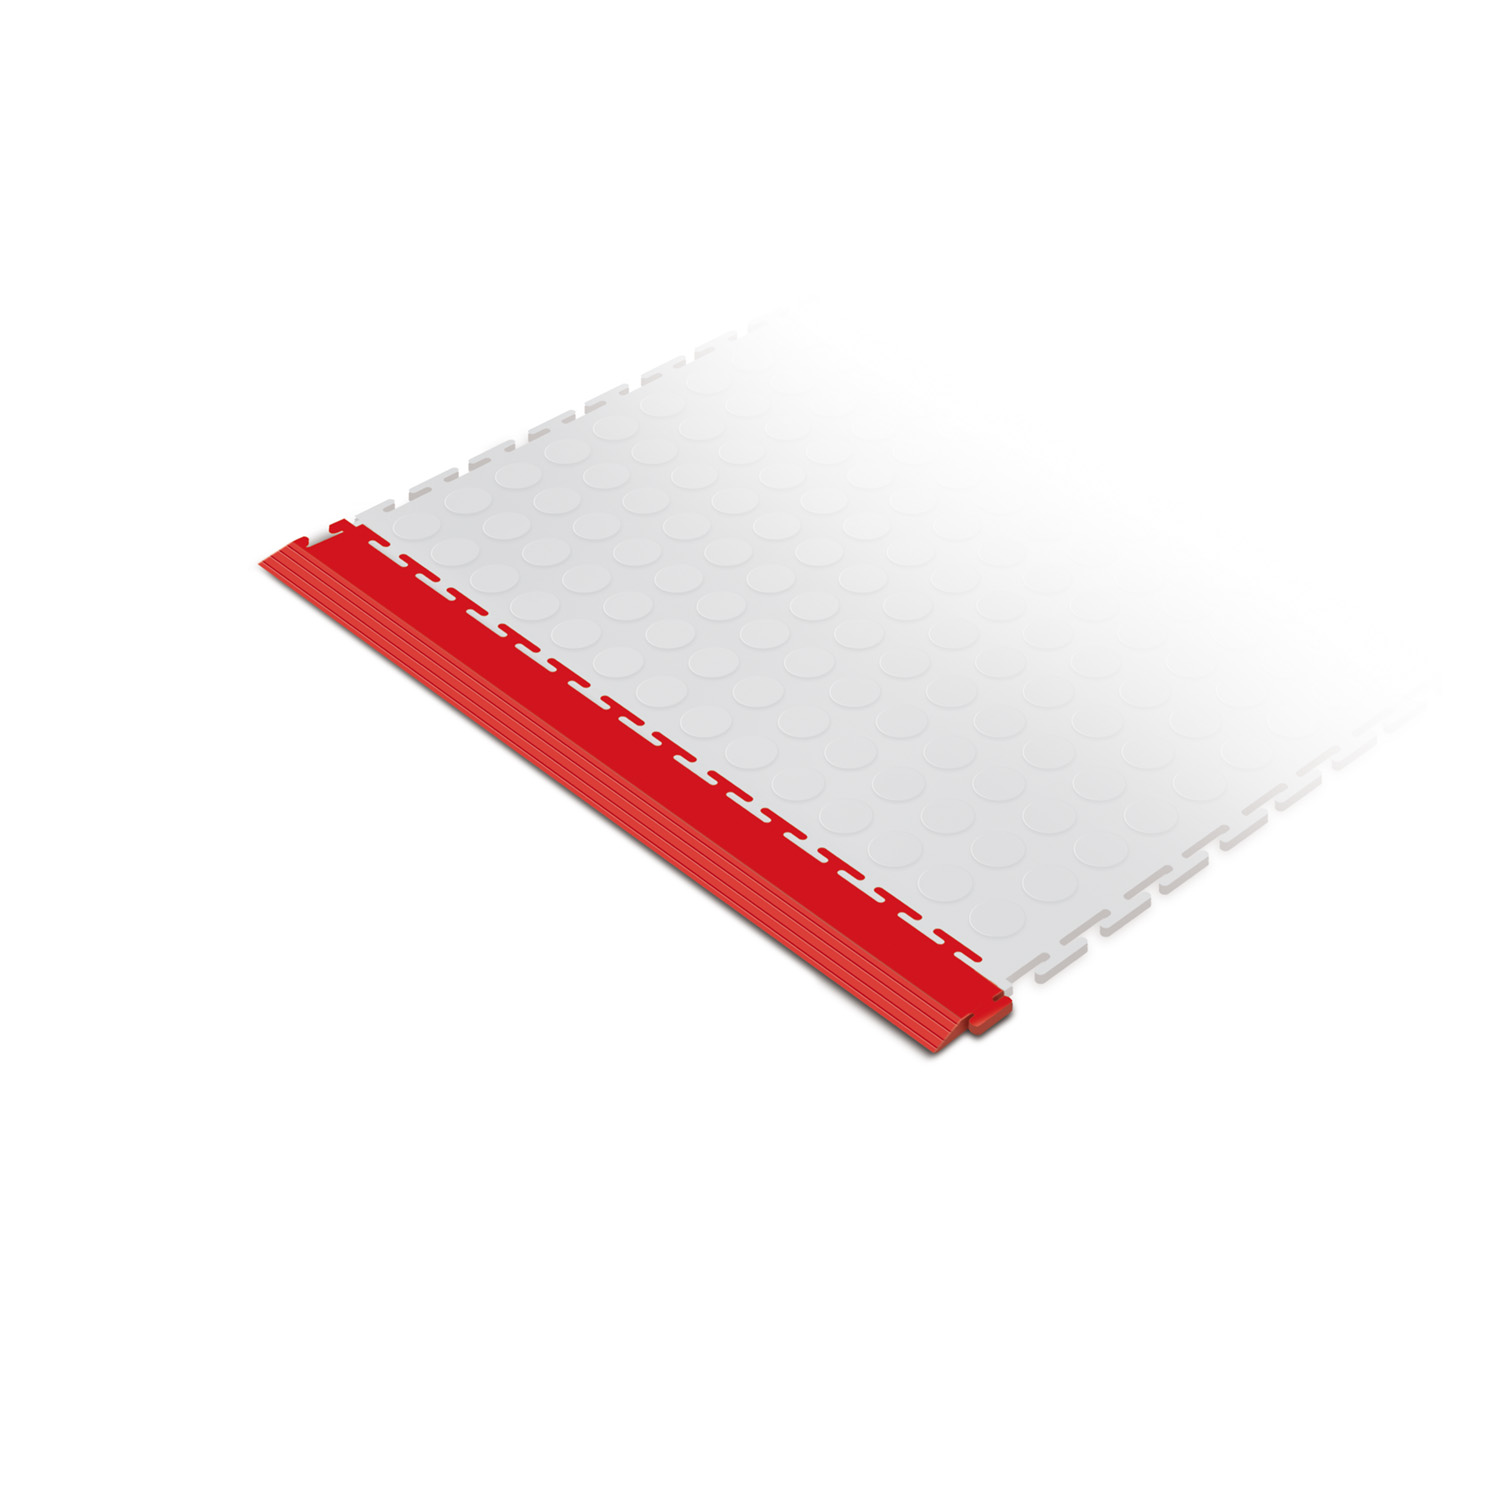 Heavy-duty edge ramp tile (red)